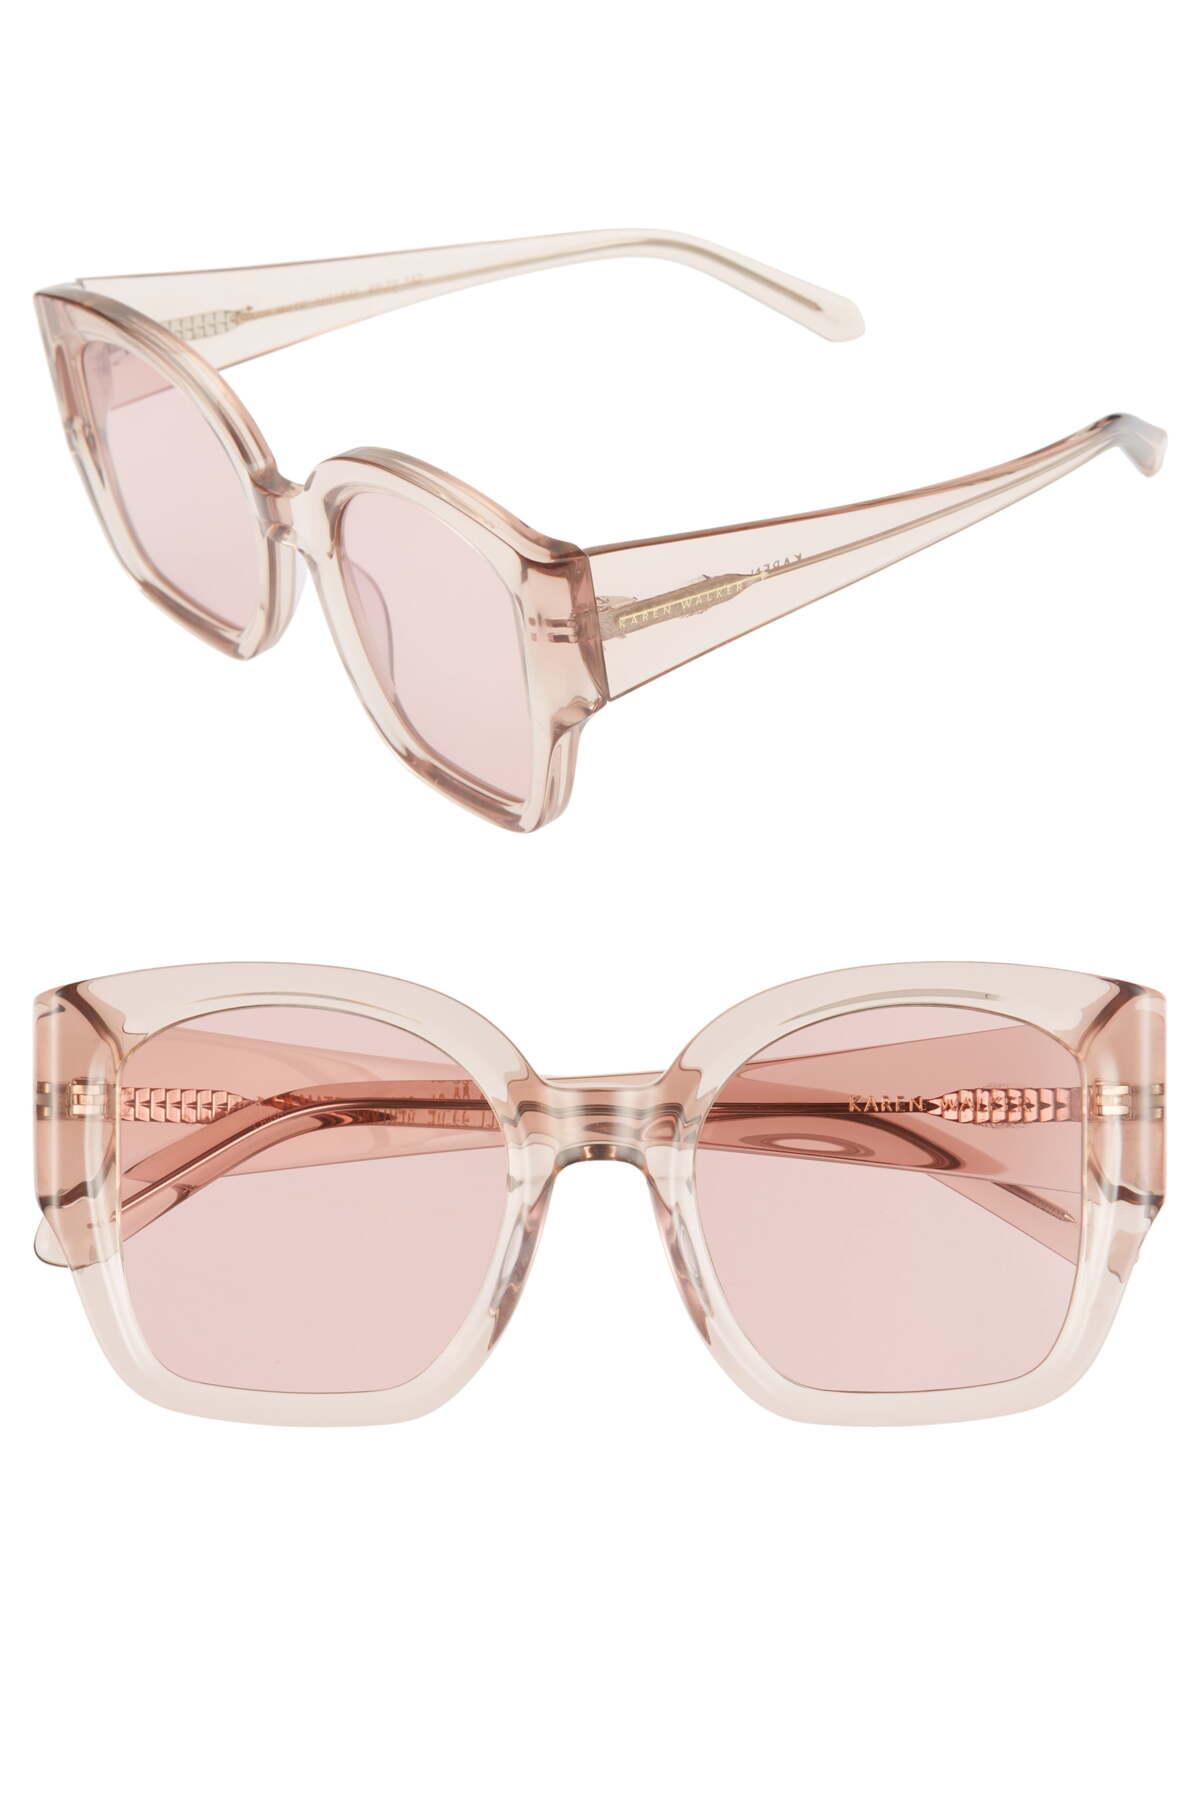 Karen Walker Checkmate 49mm Sunglasses in Pink - Lyst